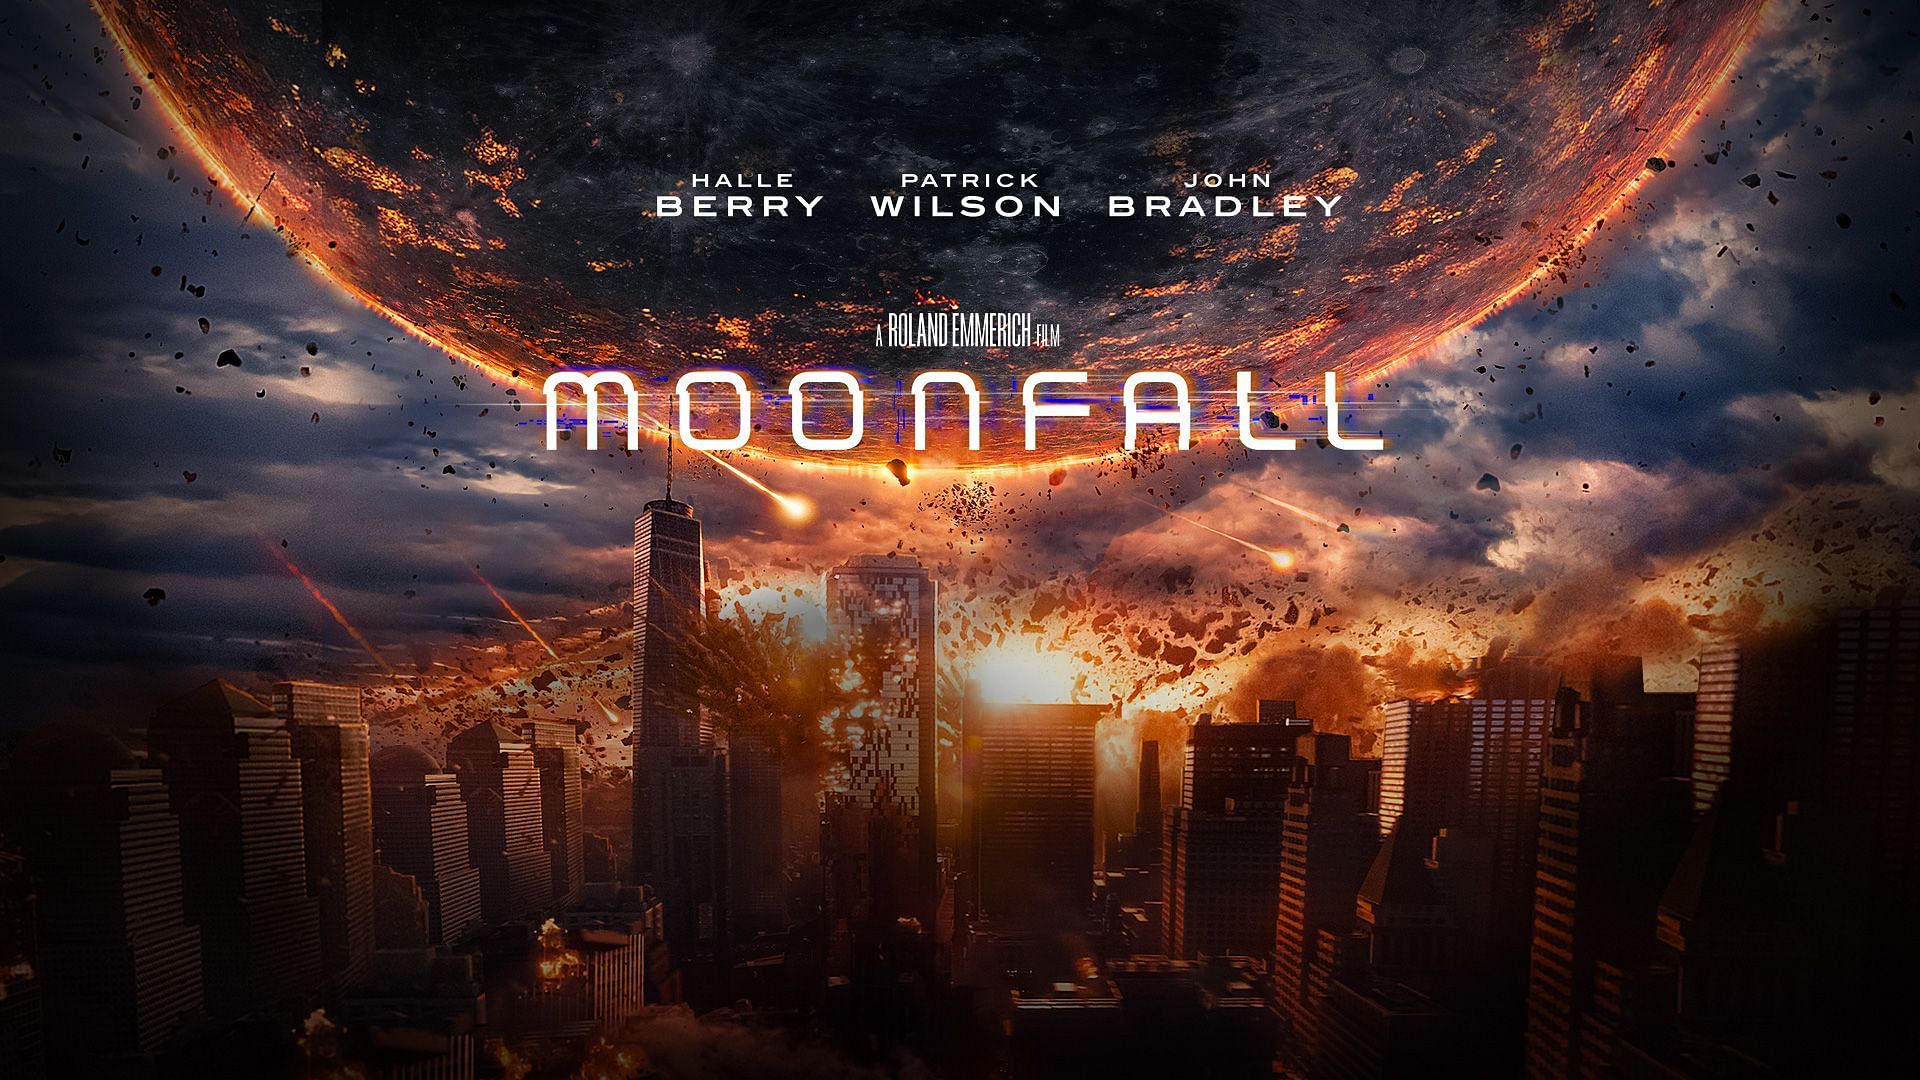 Moonfall (Image via official Moonfall movie website)